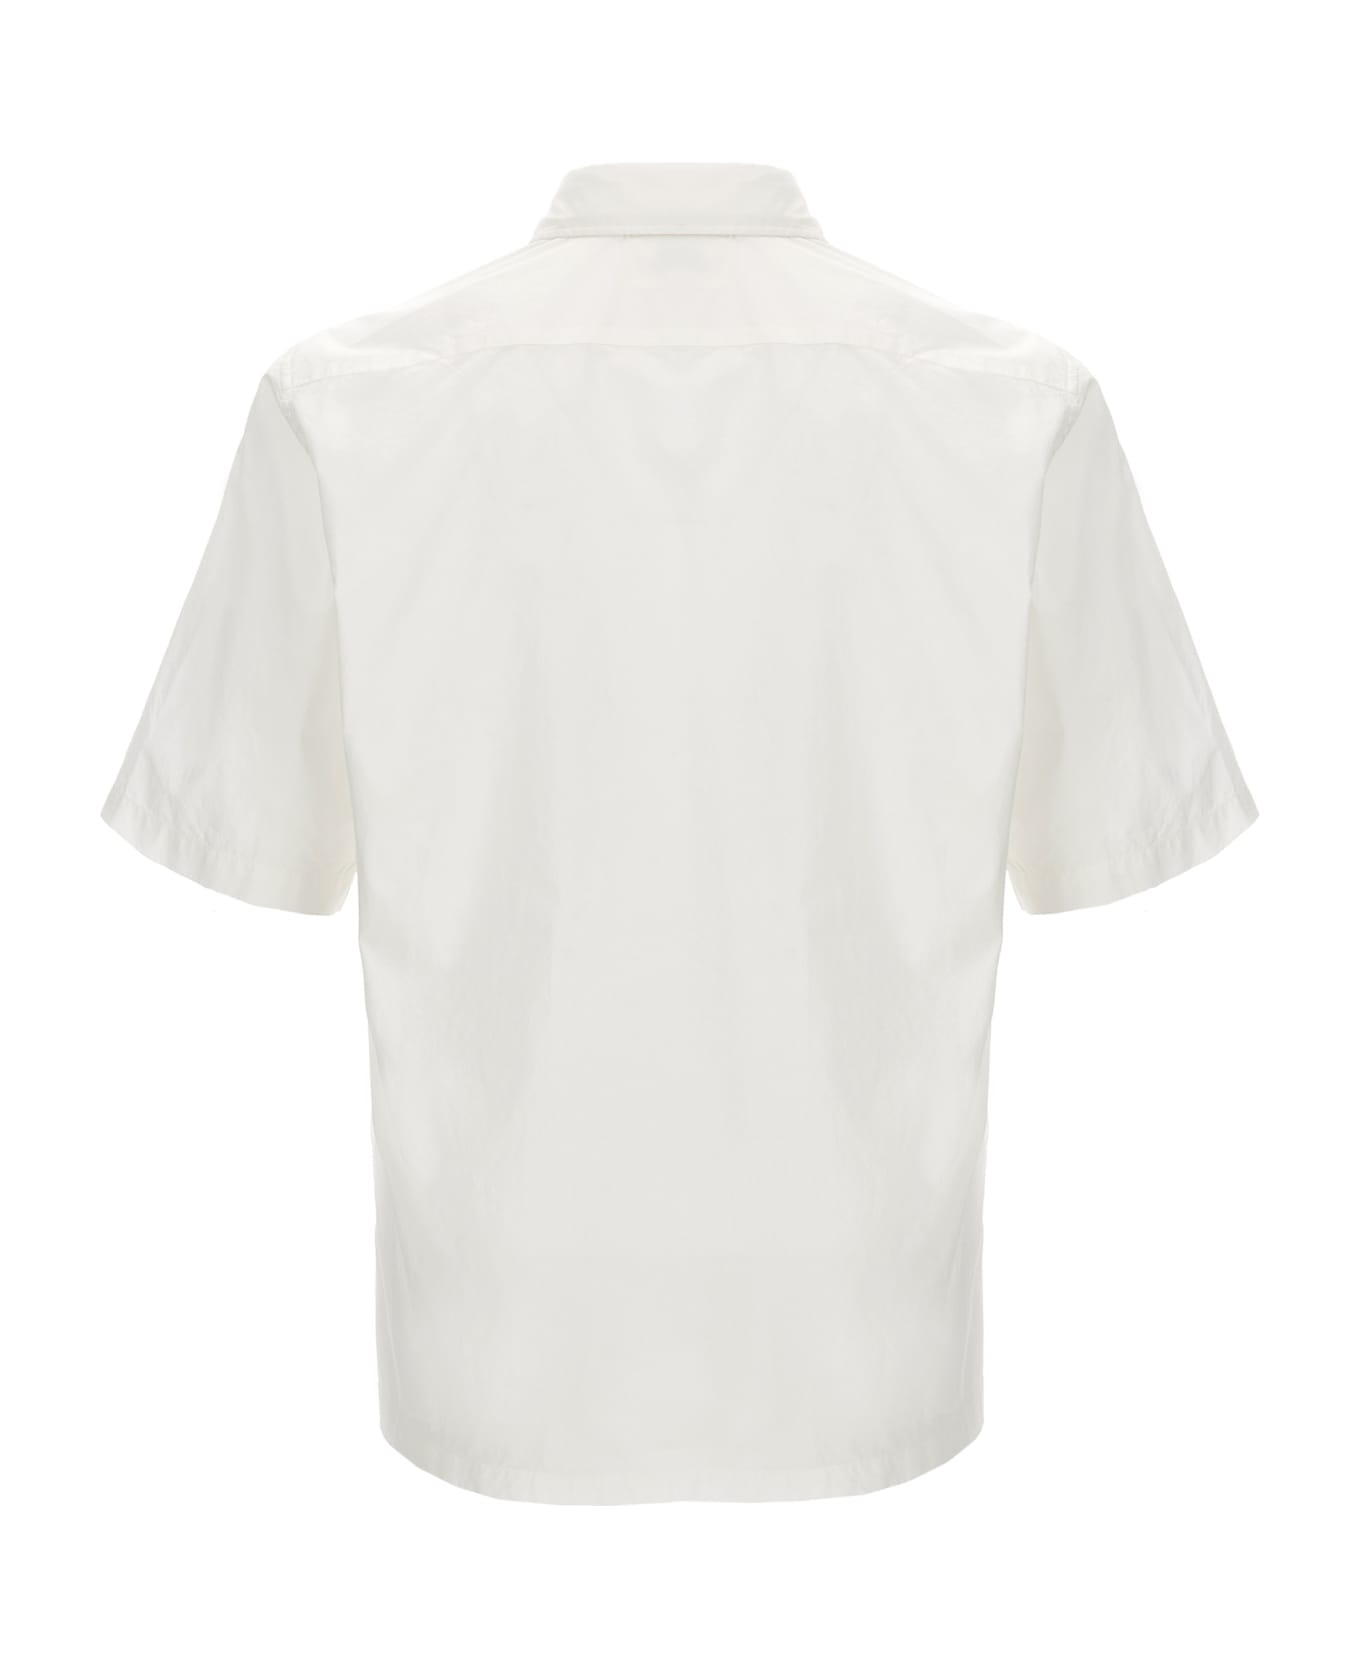 C.P. Company Logo Embroidery Shirt - Bianco